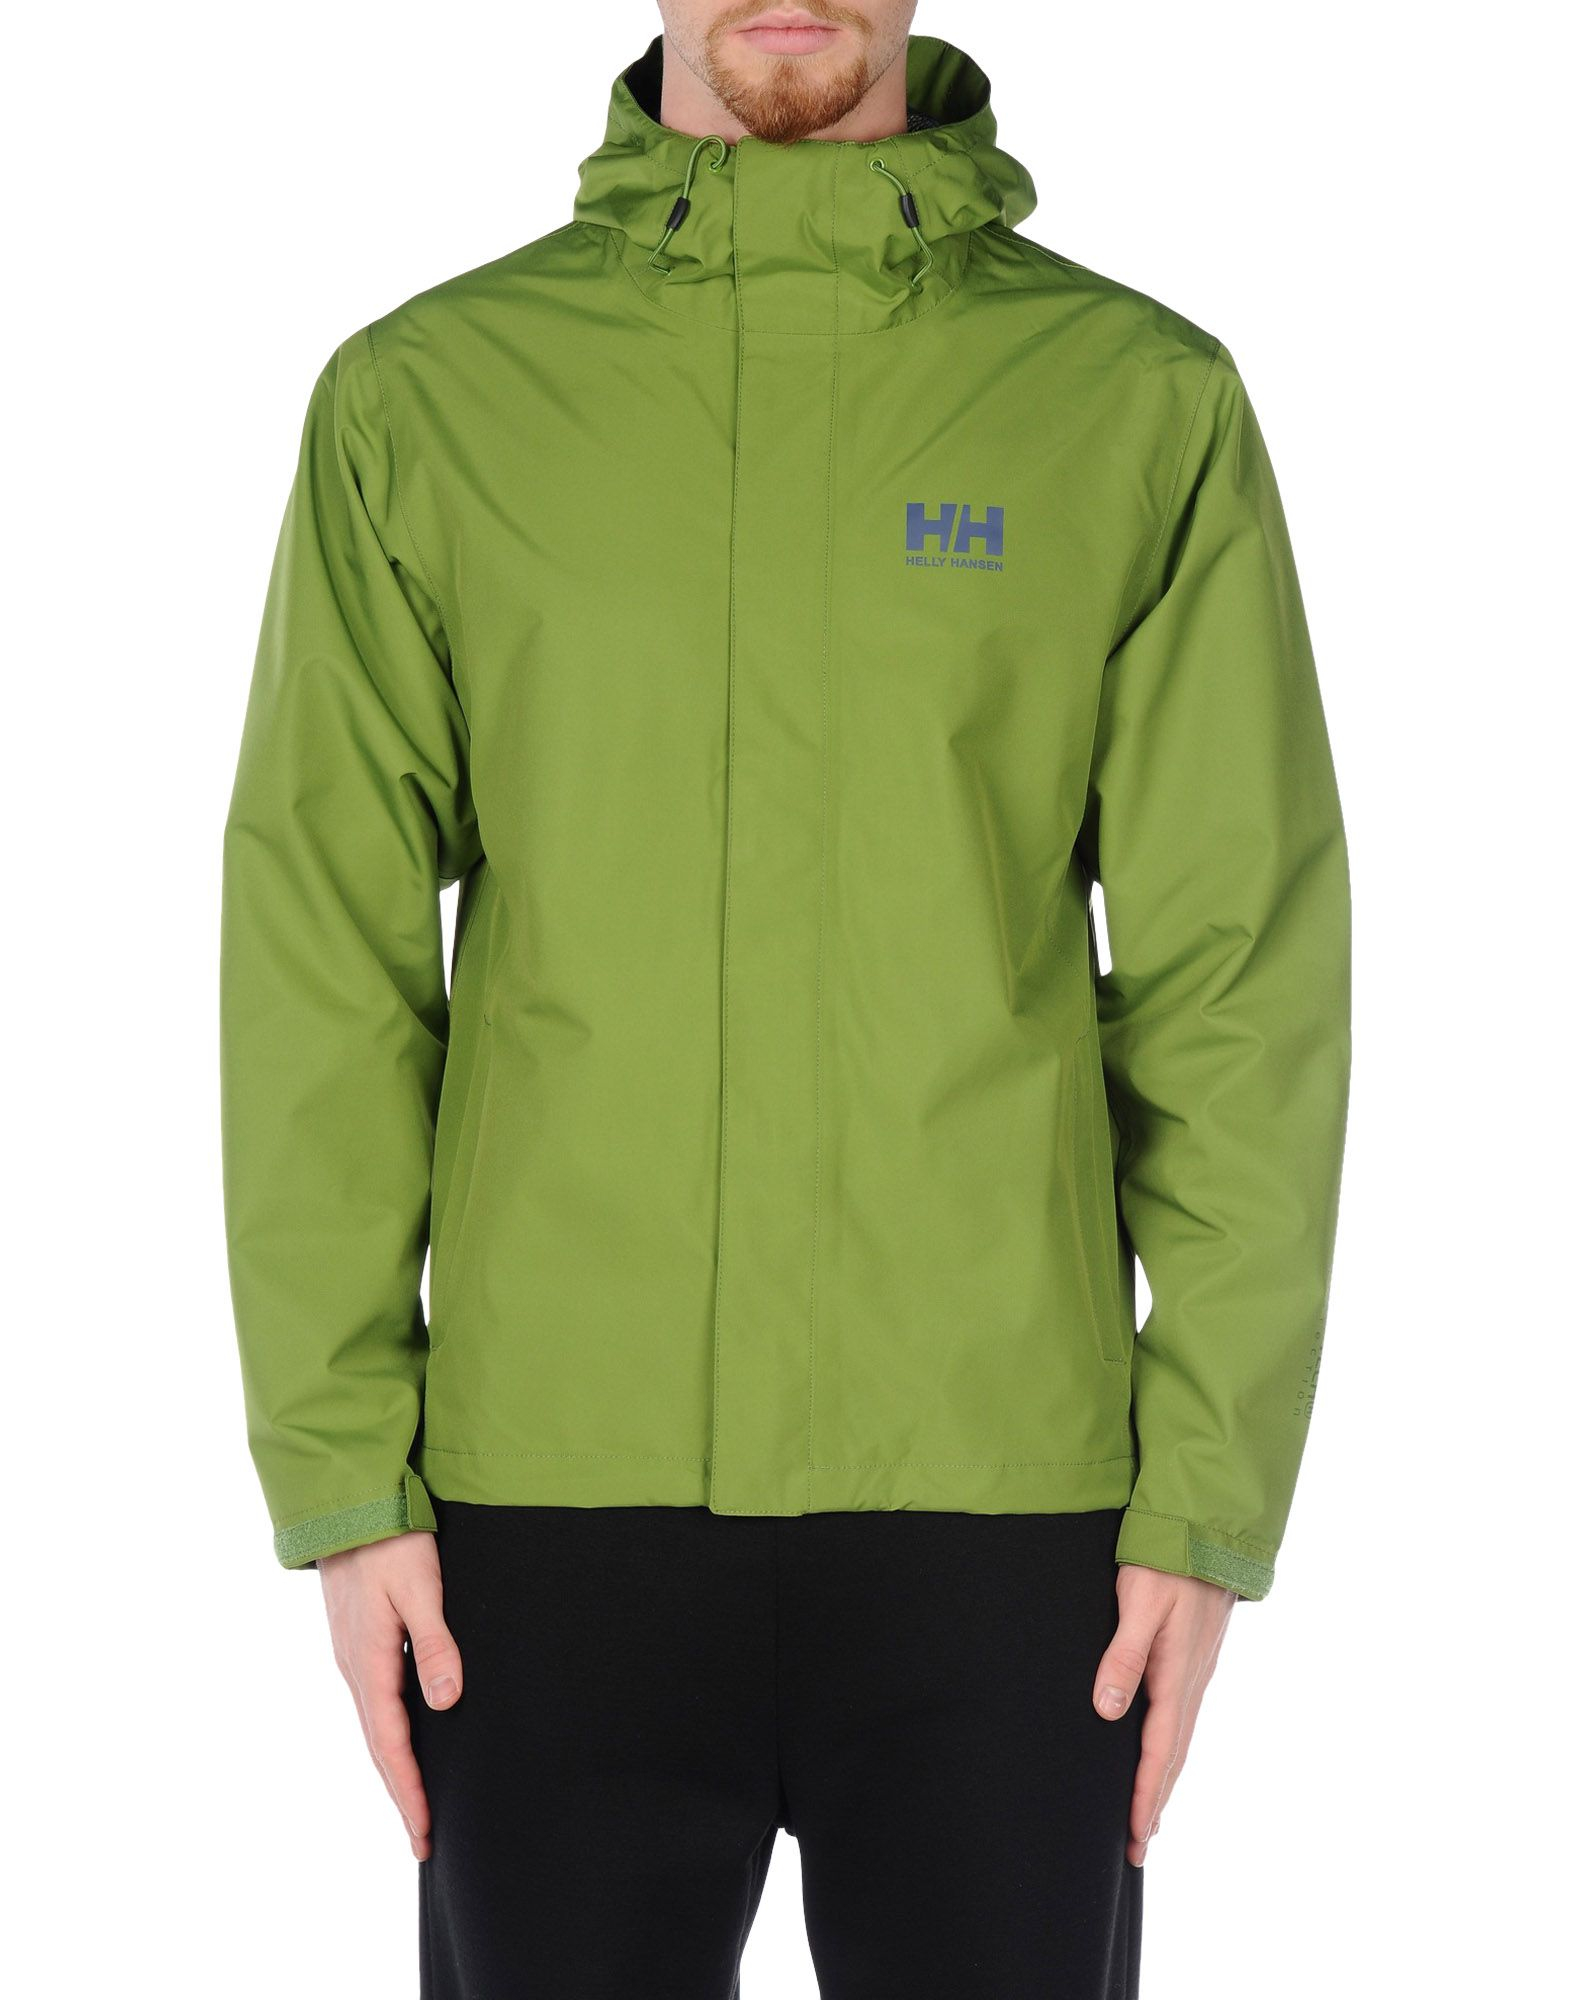 Lyst - Helly Hansen Jacket in Green for Men